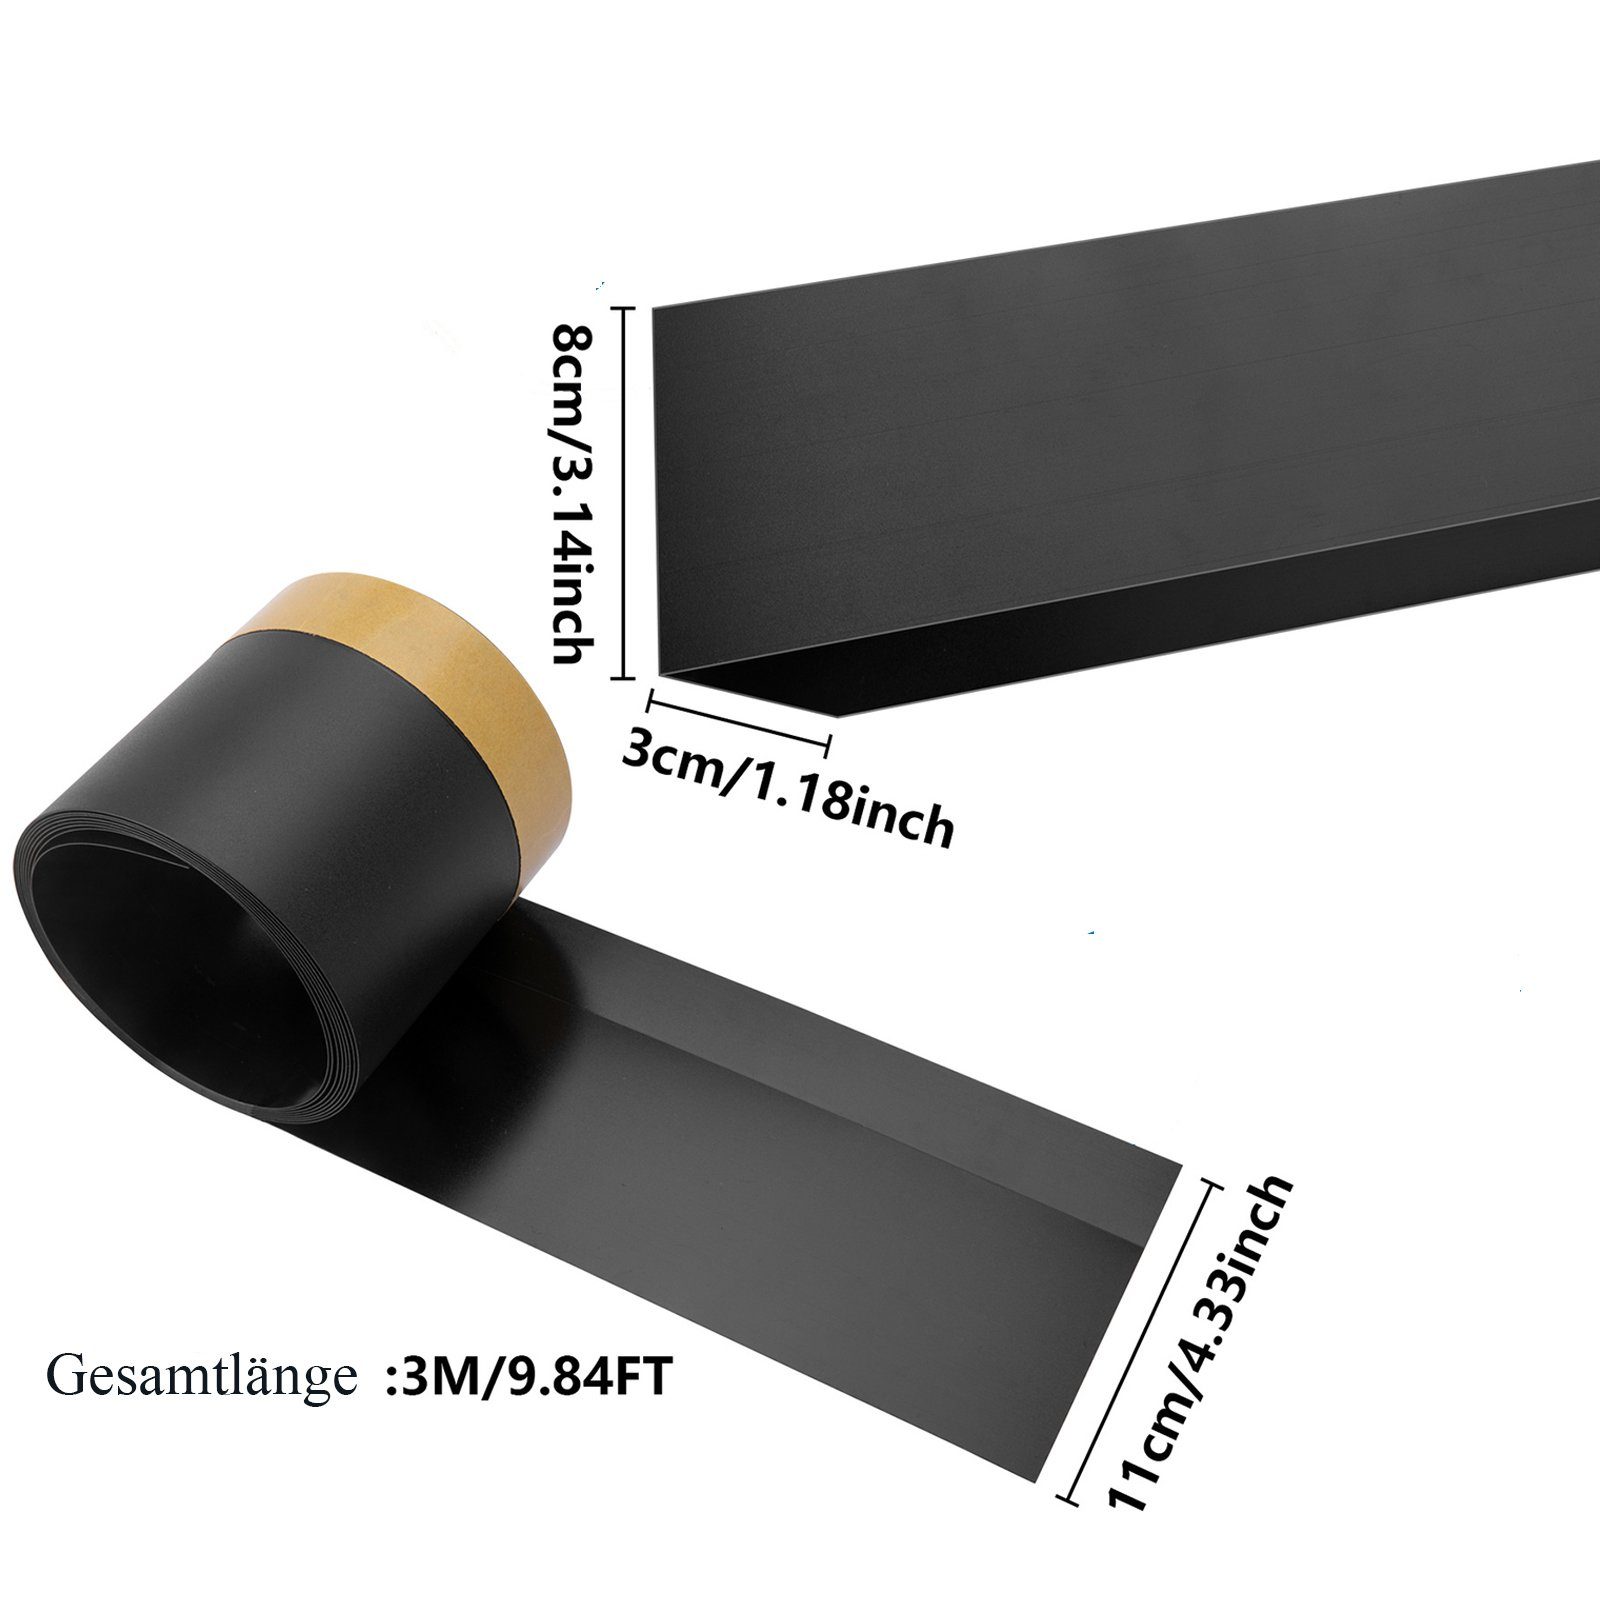 TWSOUL Klebestreifen PVC-Sofa-Stopper unter dem Selbstklebend Bett Spielzeug-Barriere 3mPVC-Sofa-Schallwand (klar)